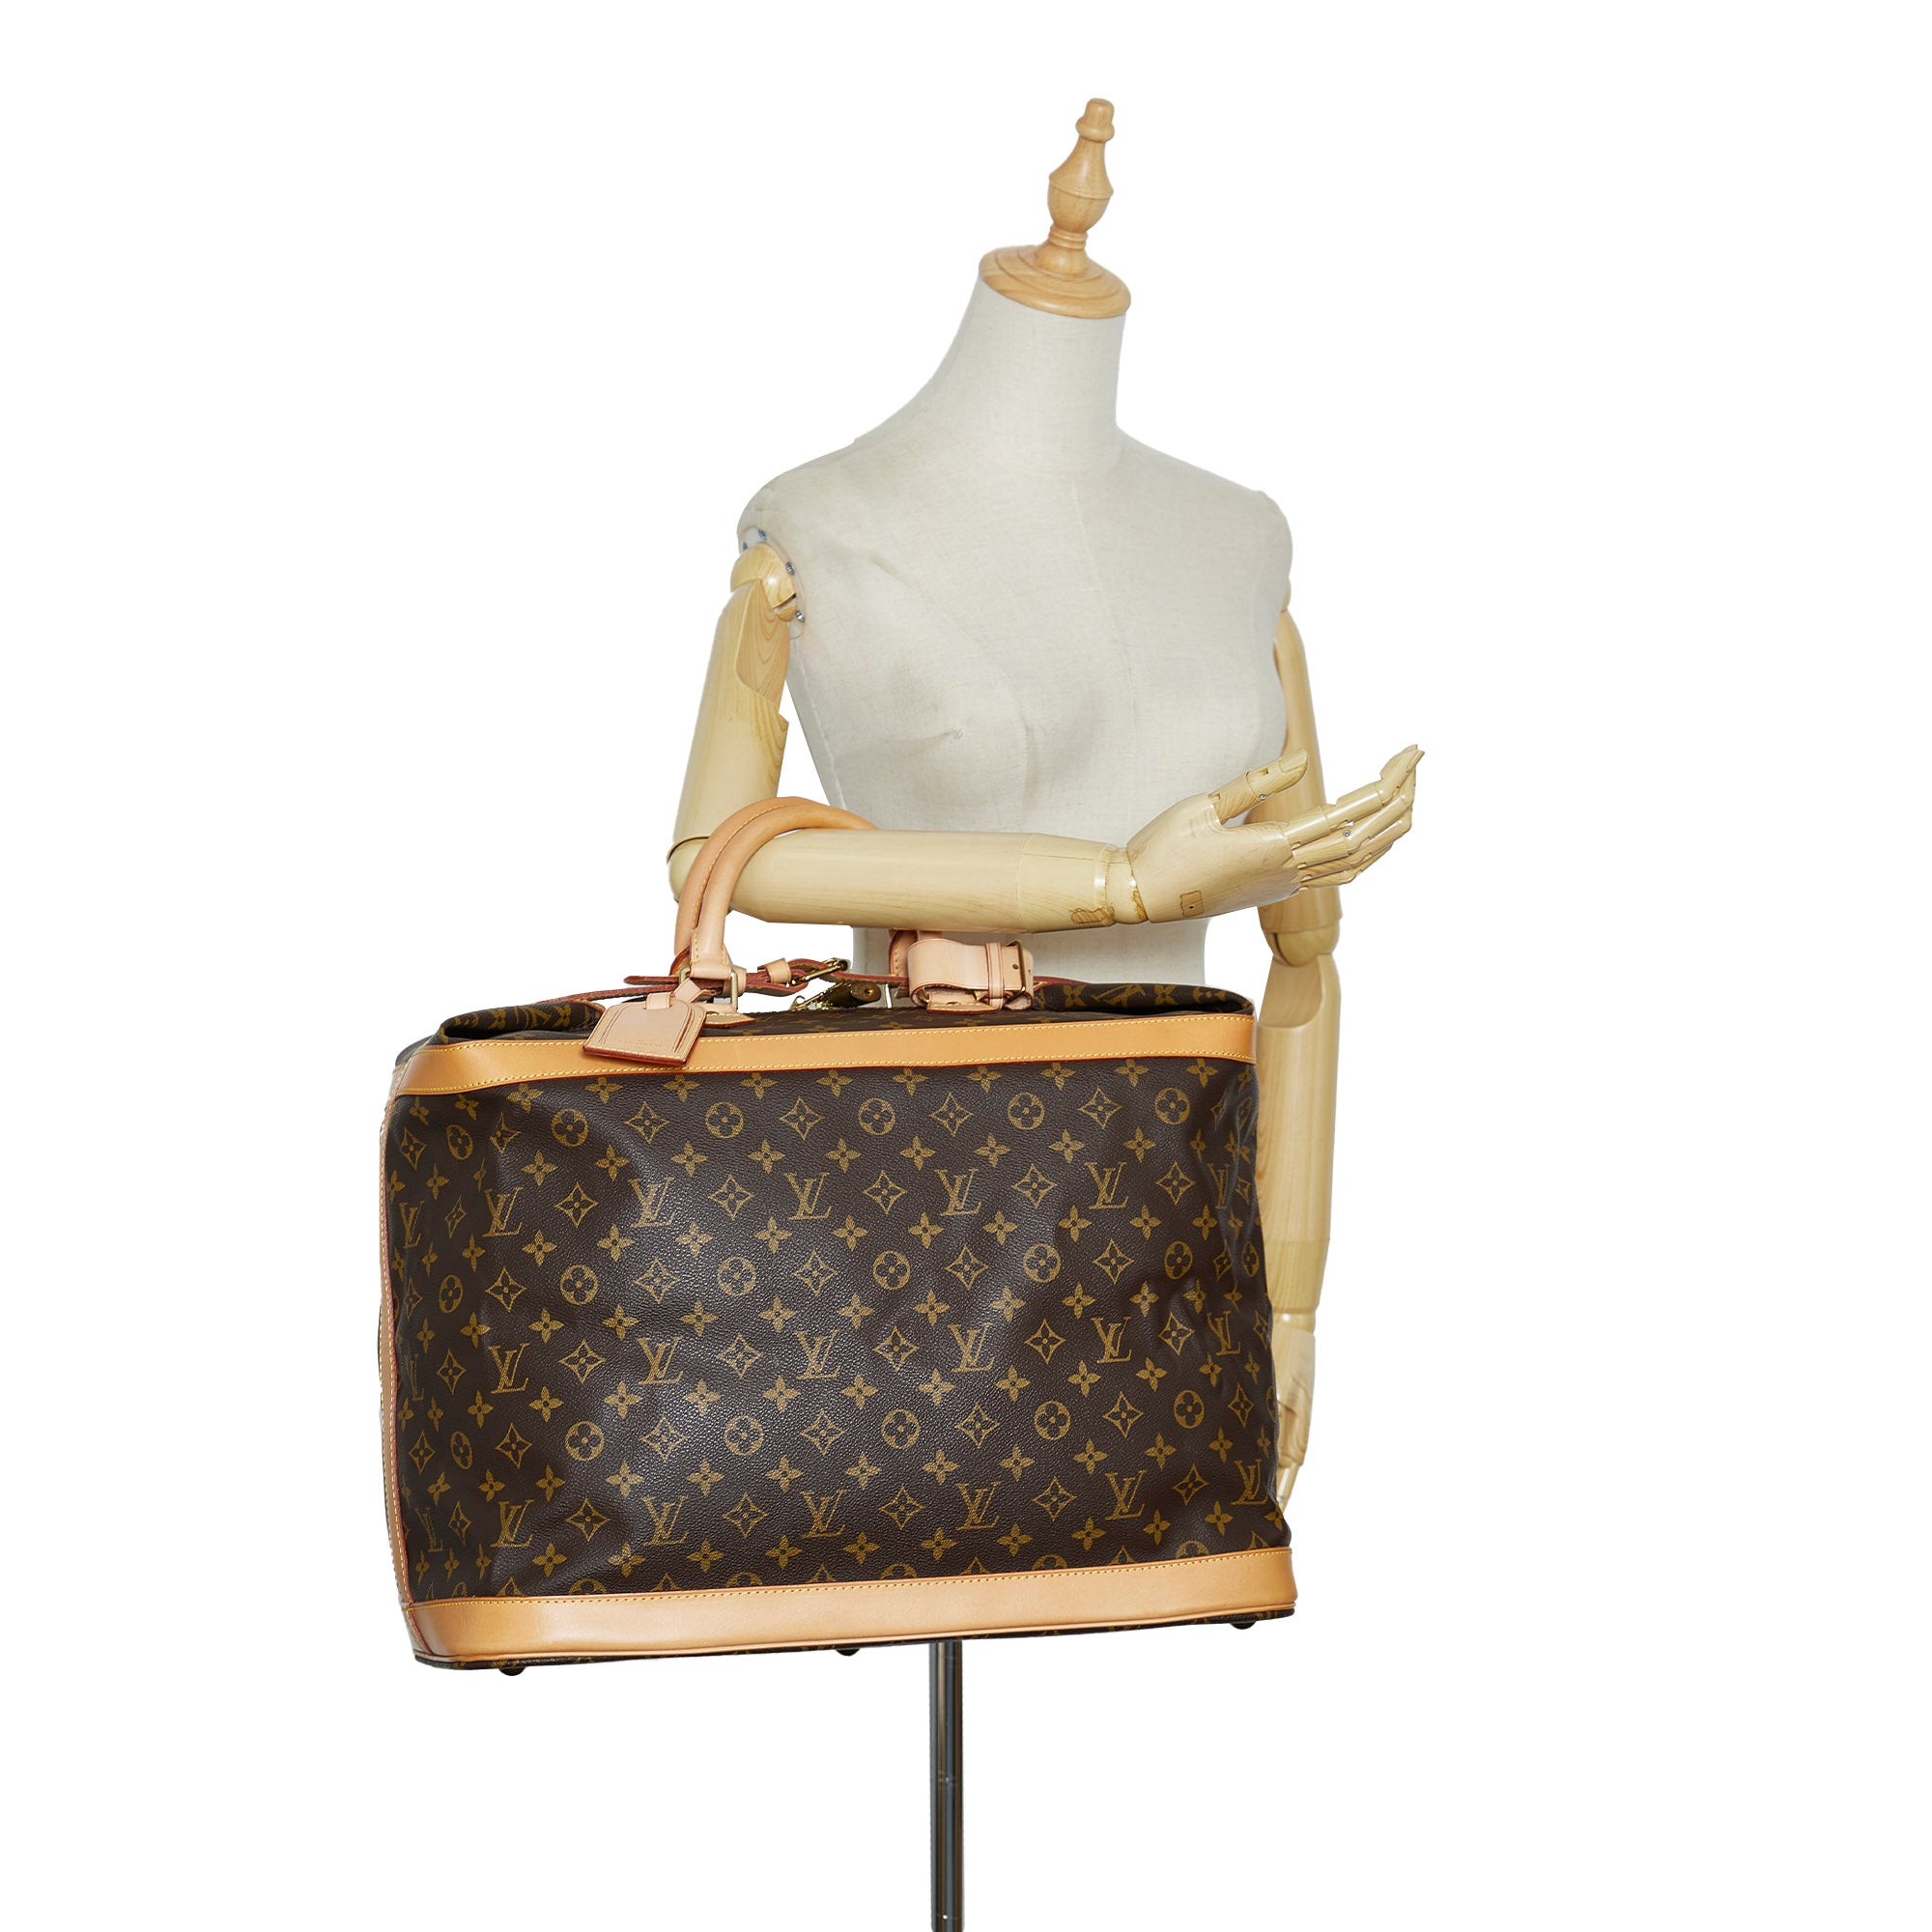 Foxy Couture Carmel  Shop Louis Vuitton Handbags, Clothing